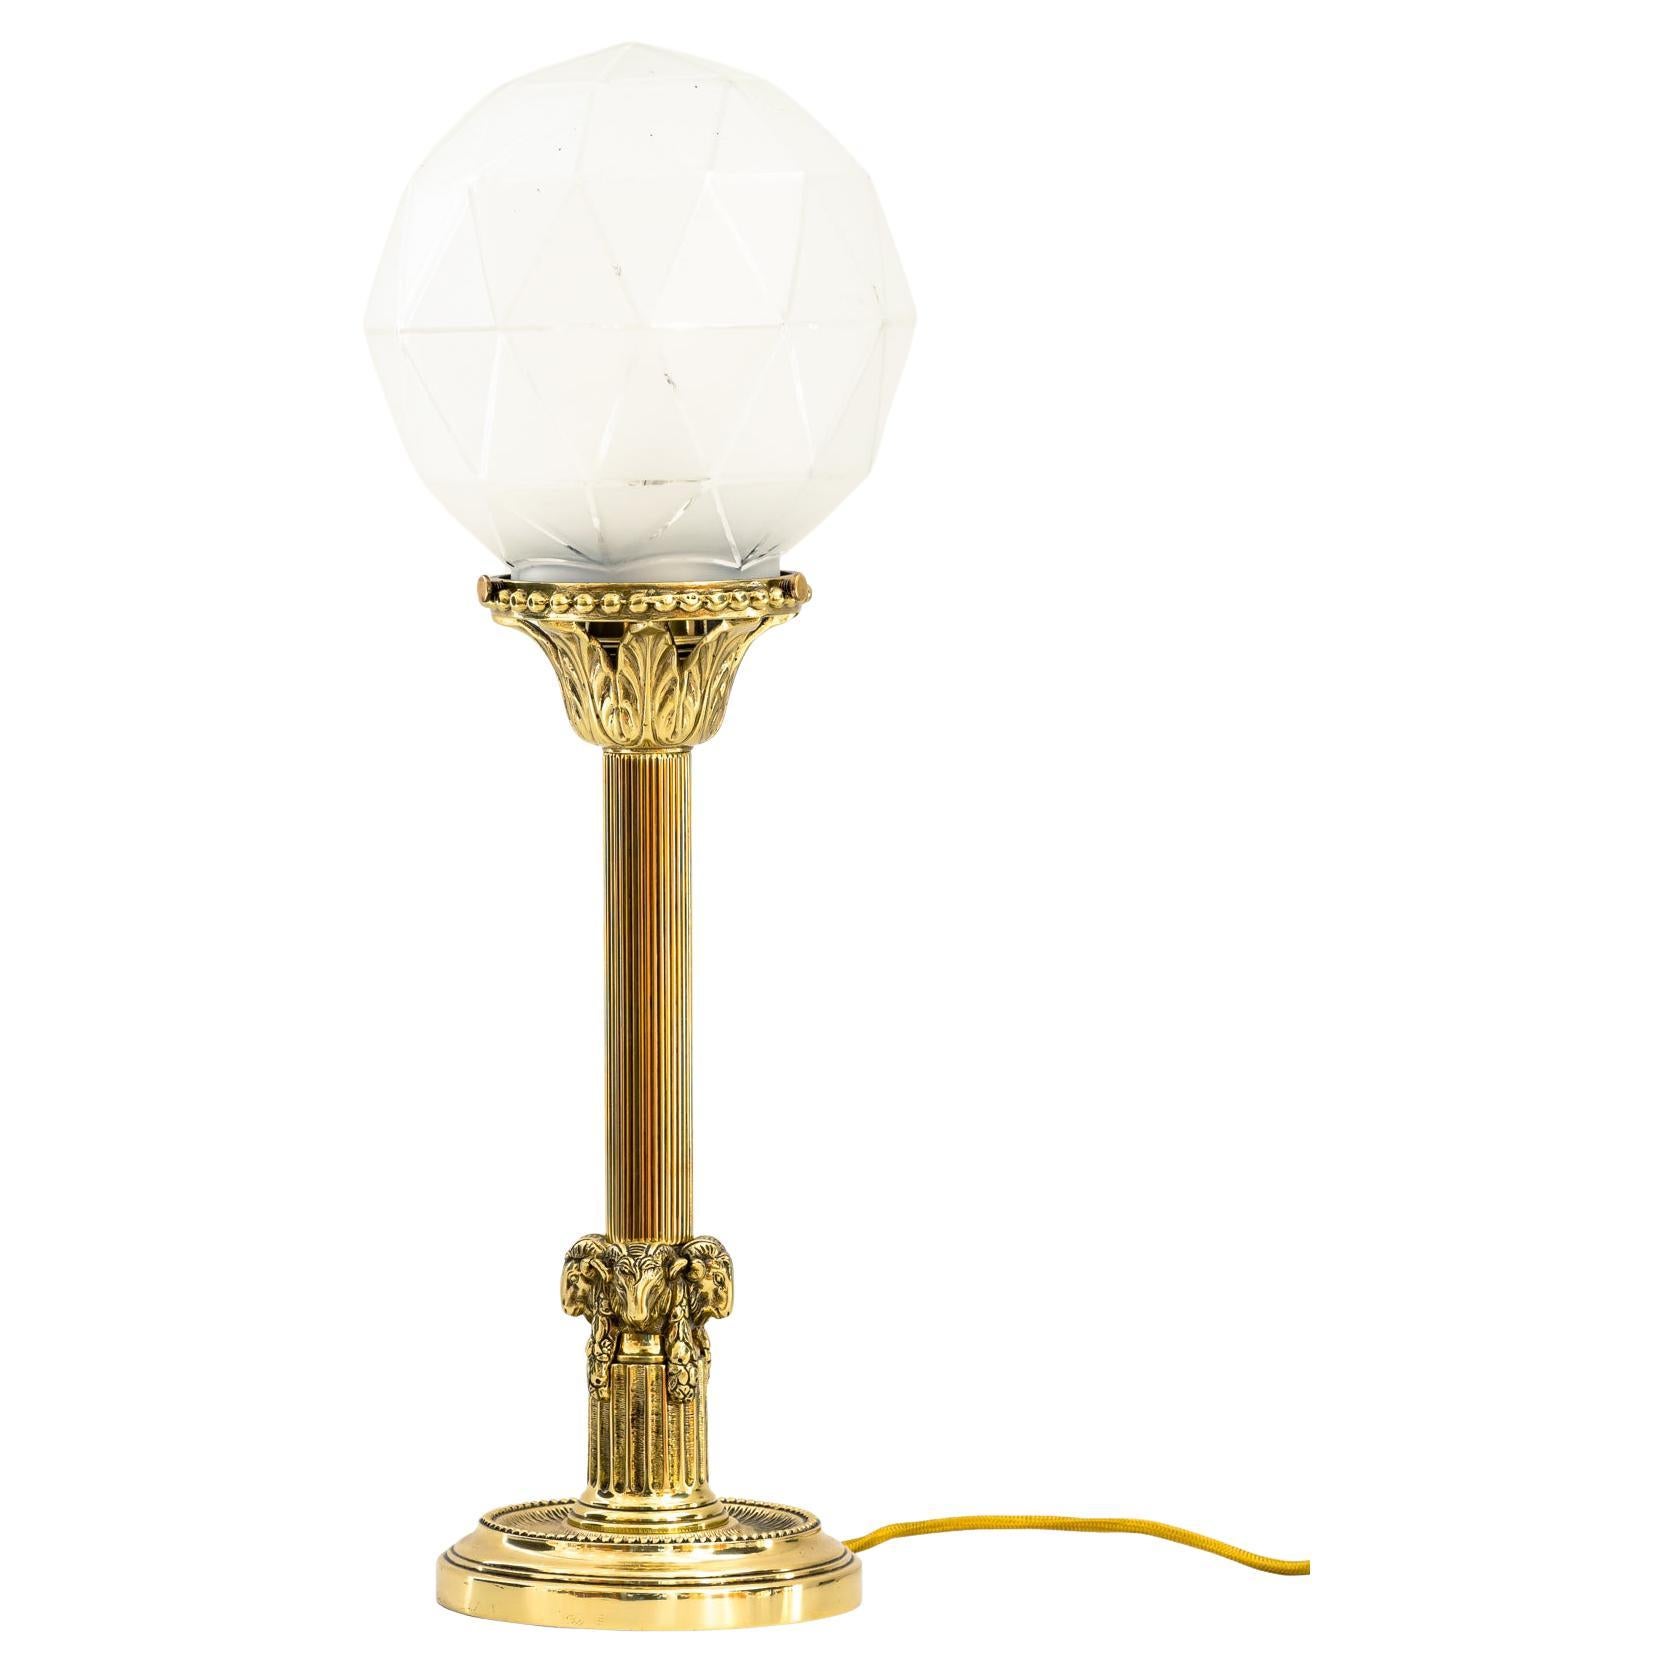 Art Deco Table Lamp with Original Glass Shade Vienna around 1920s